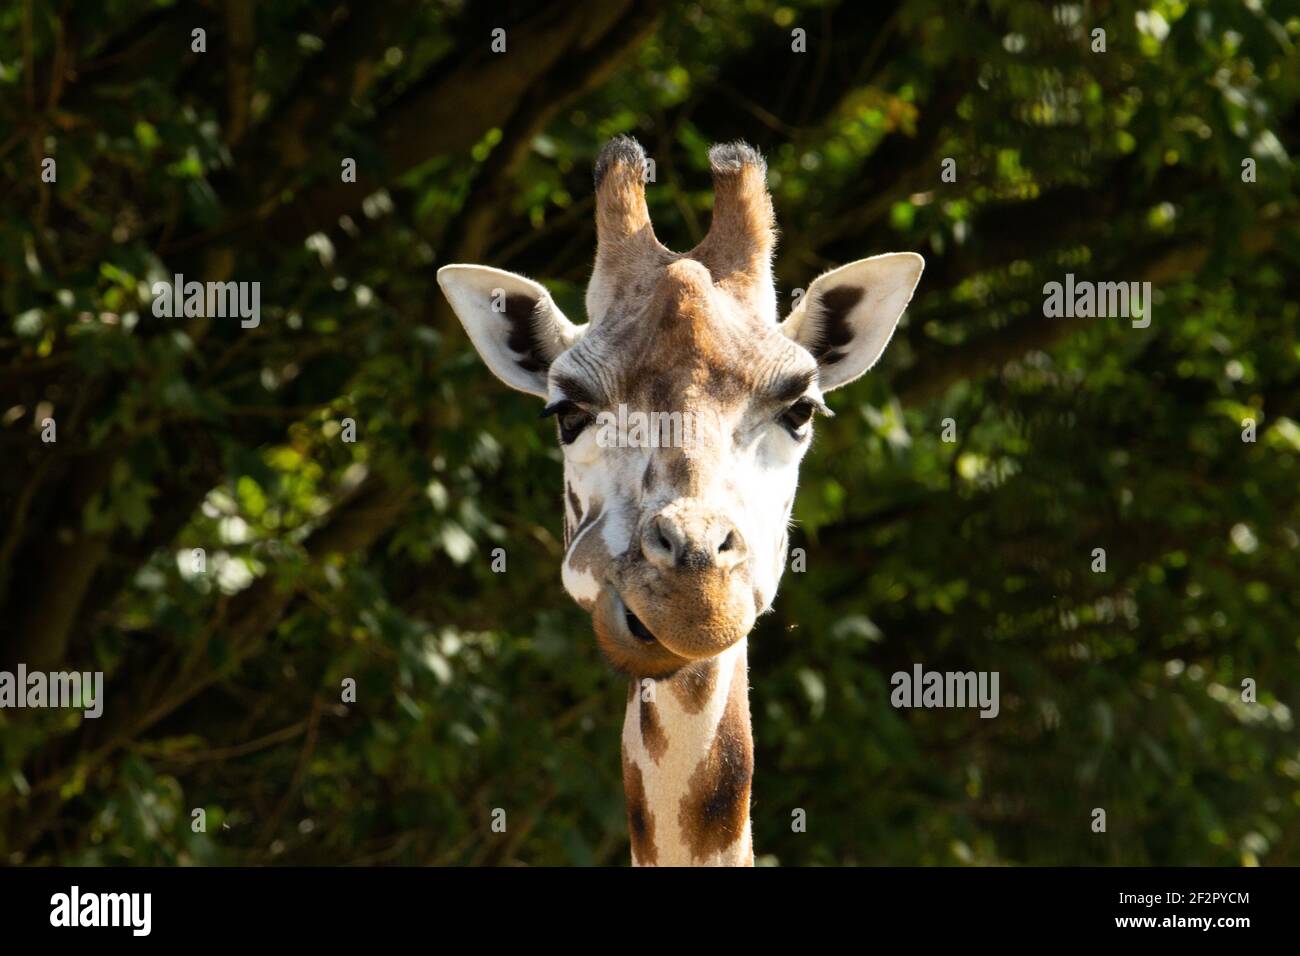 Rothschild's giraffe (Giraffa camelopardalis rothschildi) a single adult Rothschild's giraffe chewing leaves Stock Photo